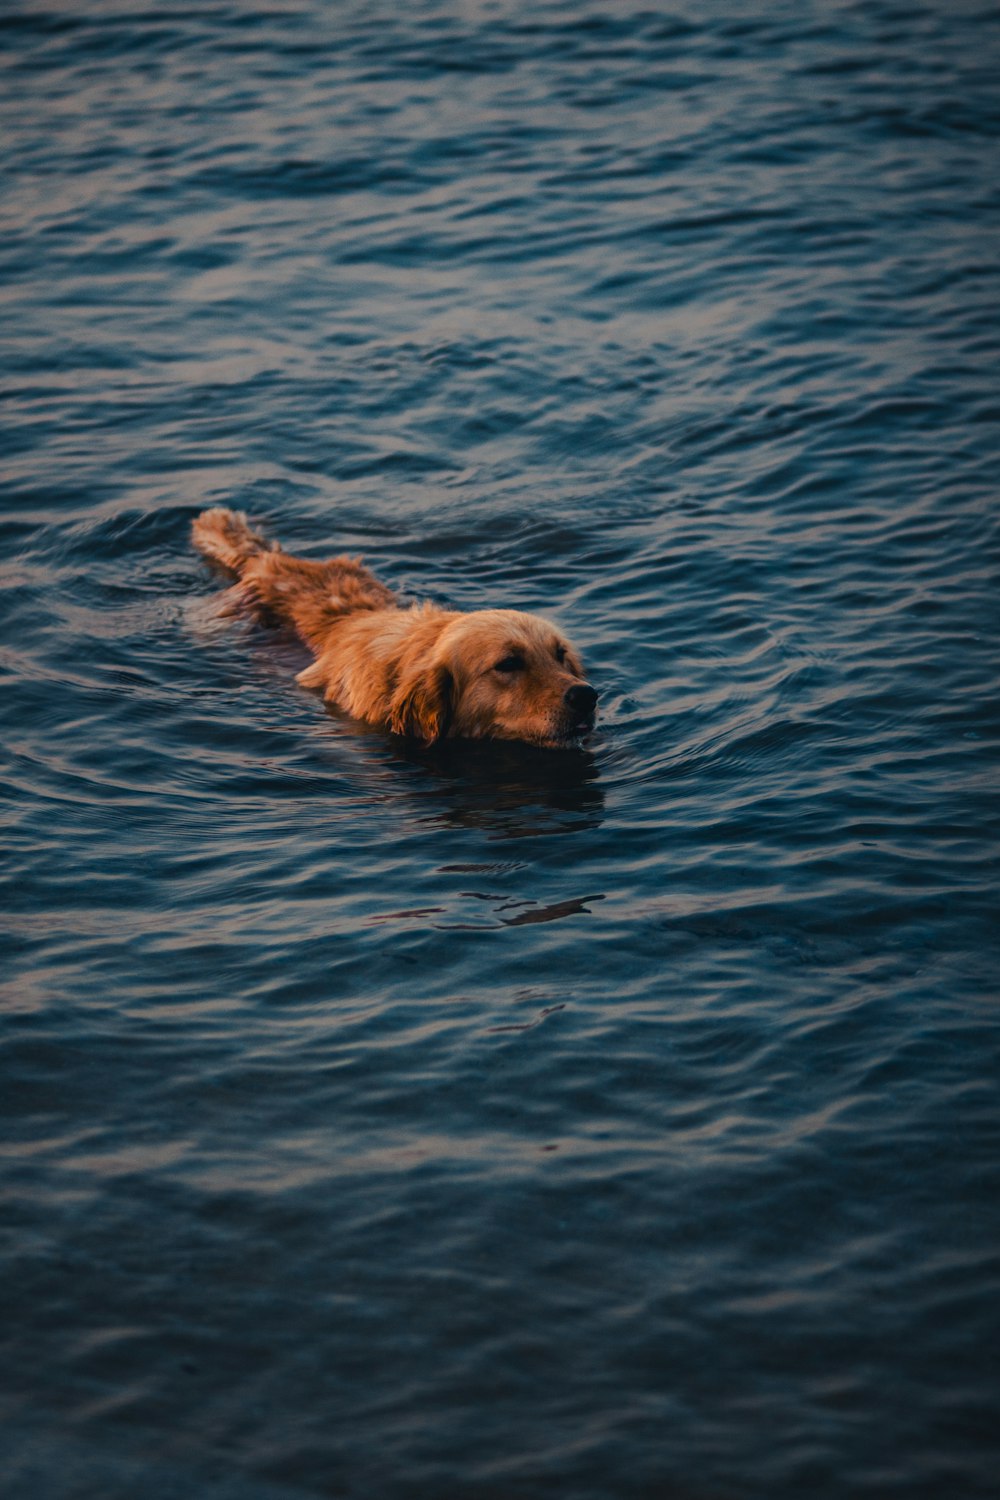 a golden retriever swimming in the ocean